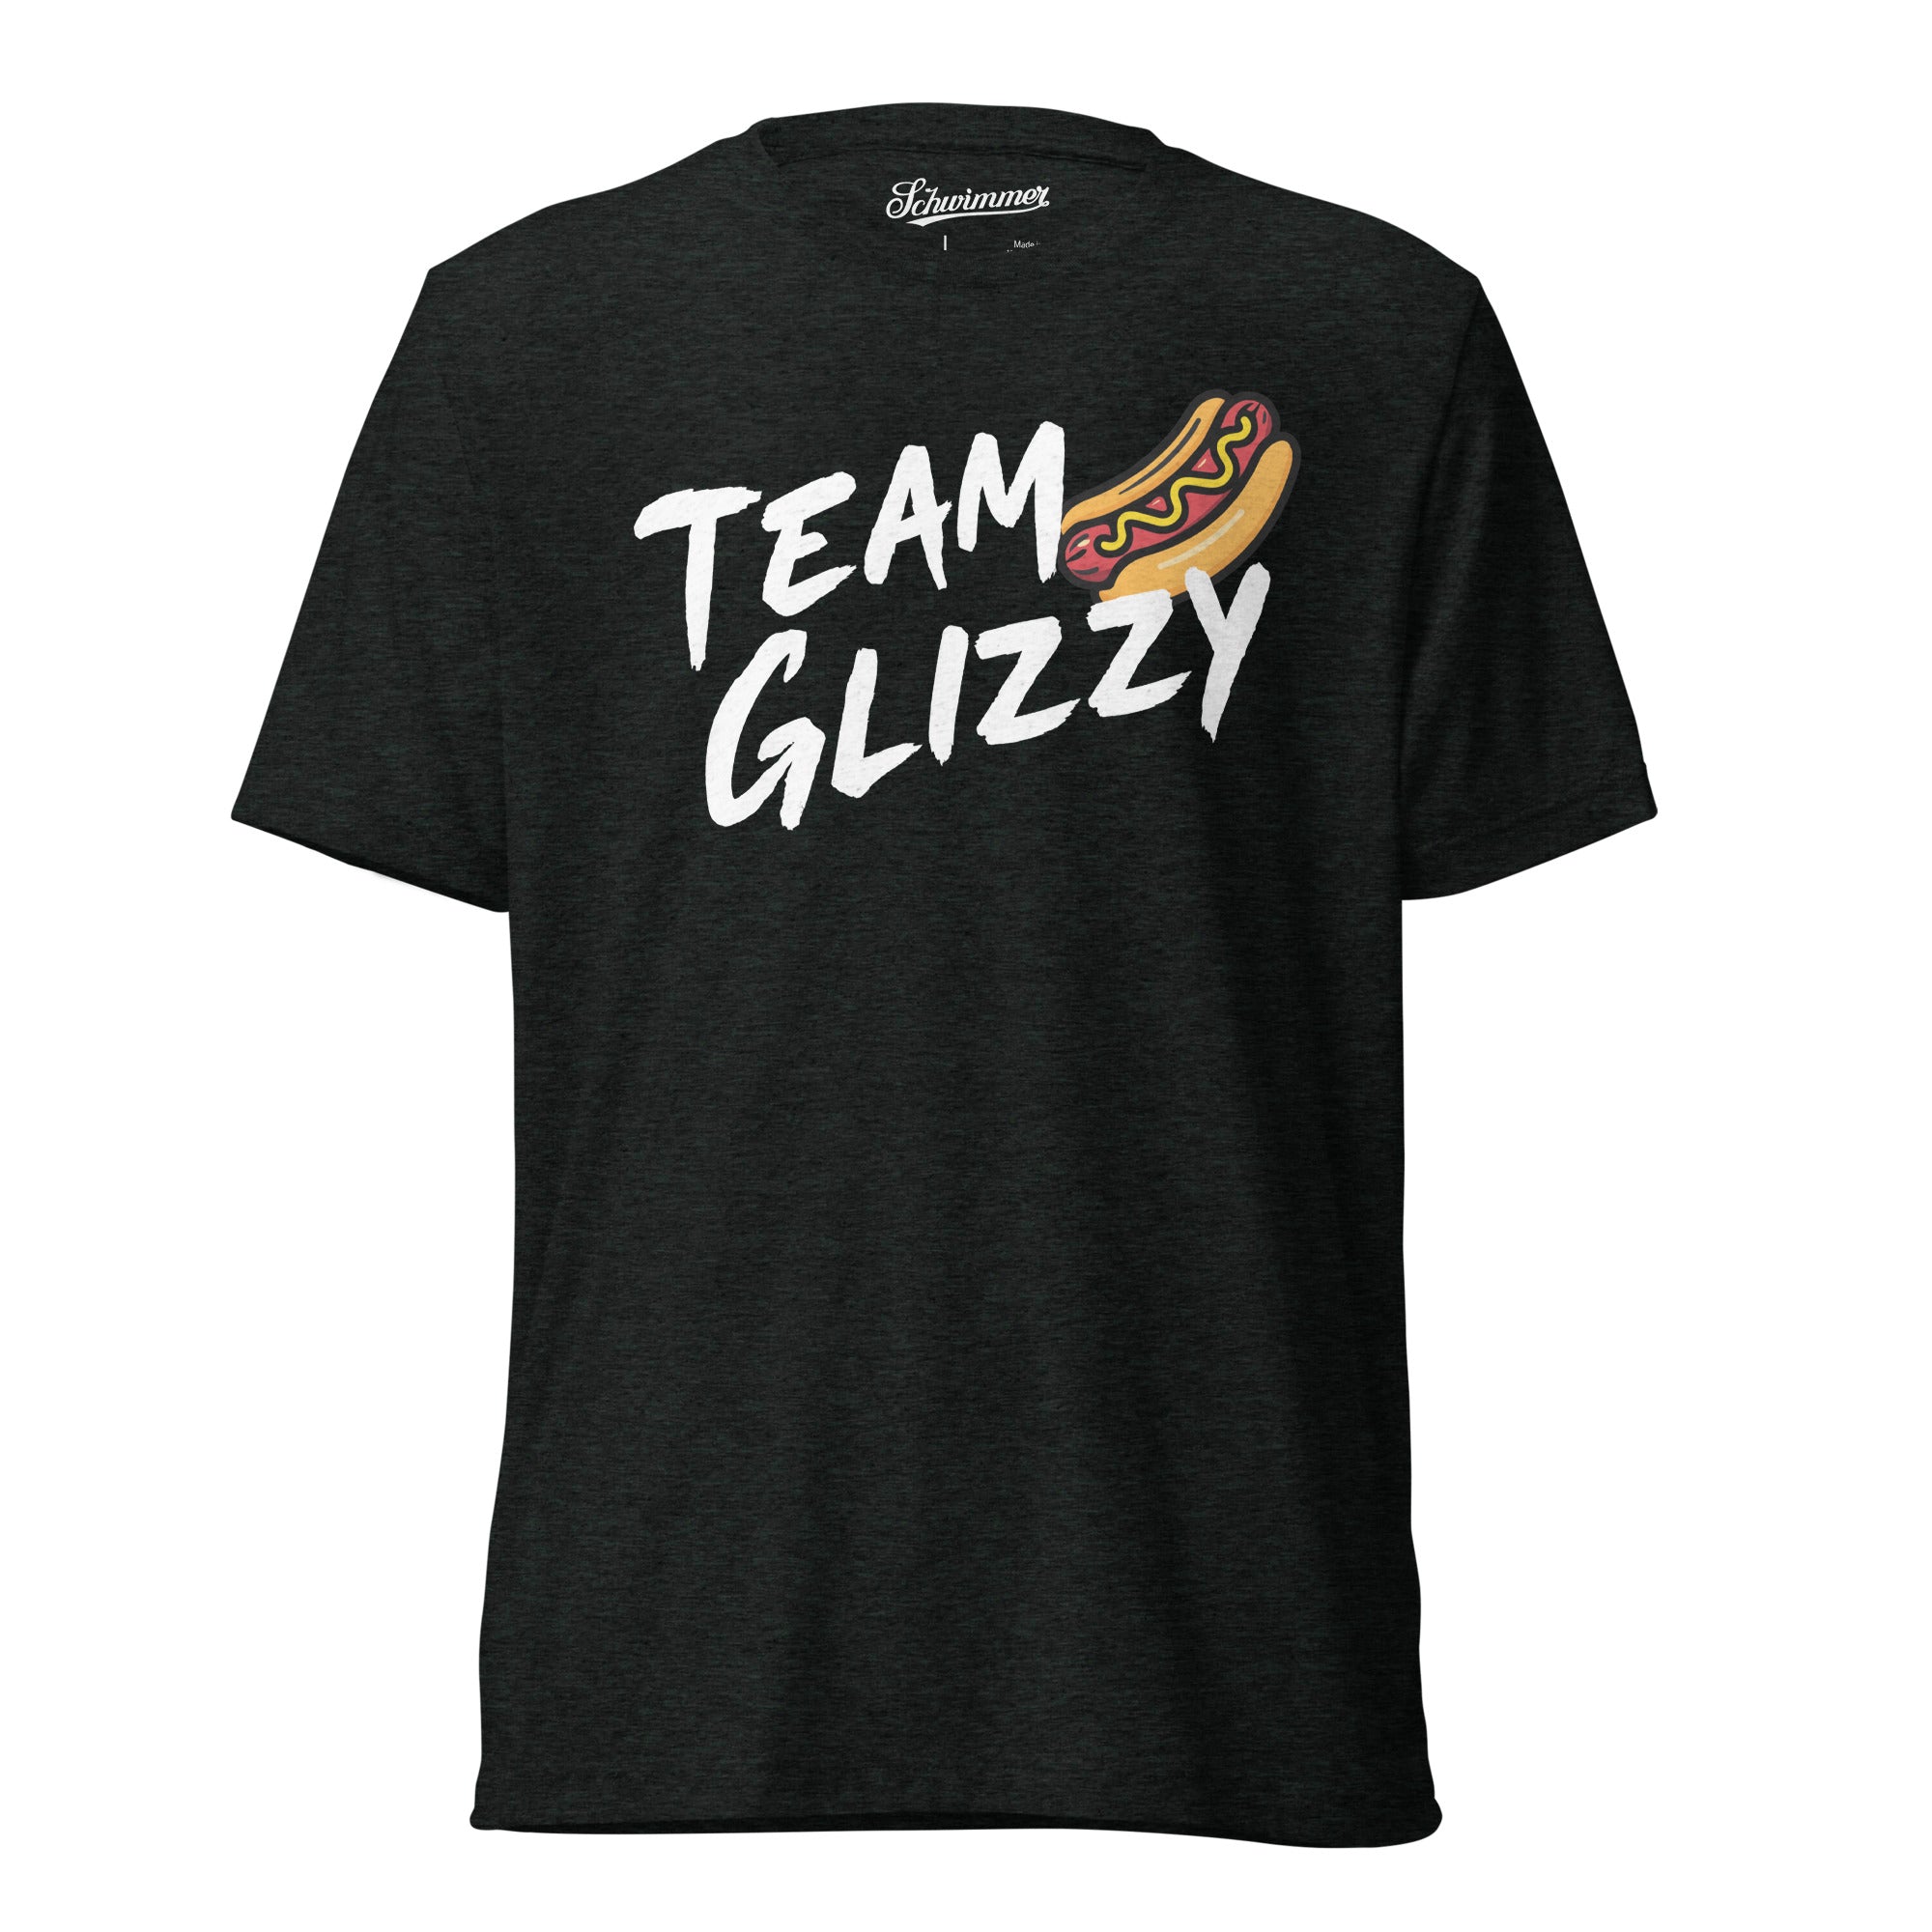 Glizzy t-shirt